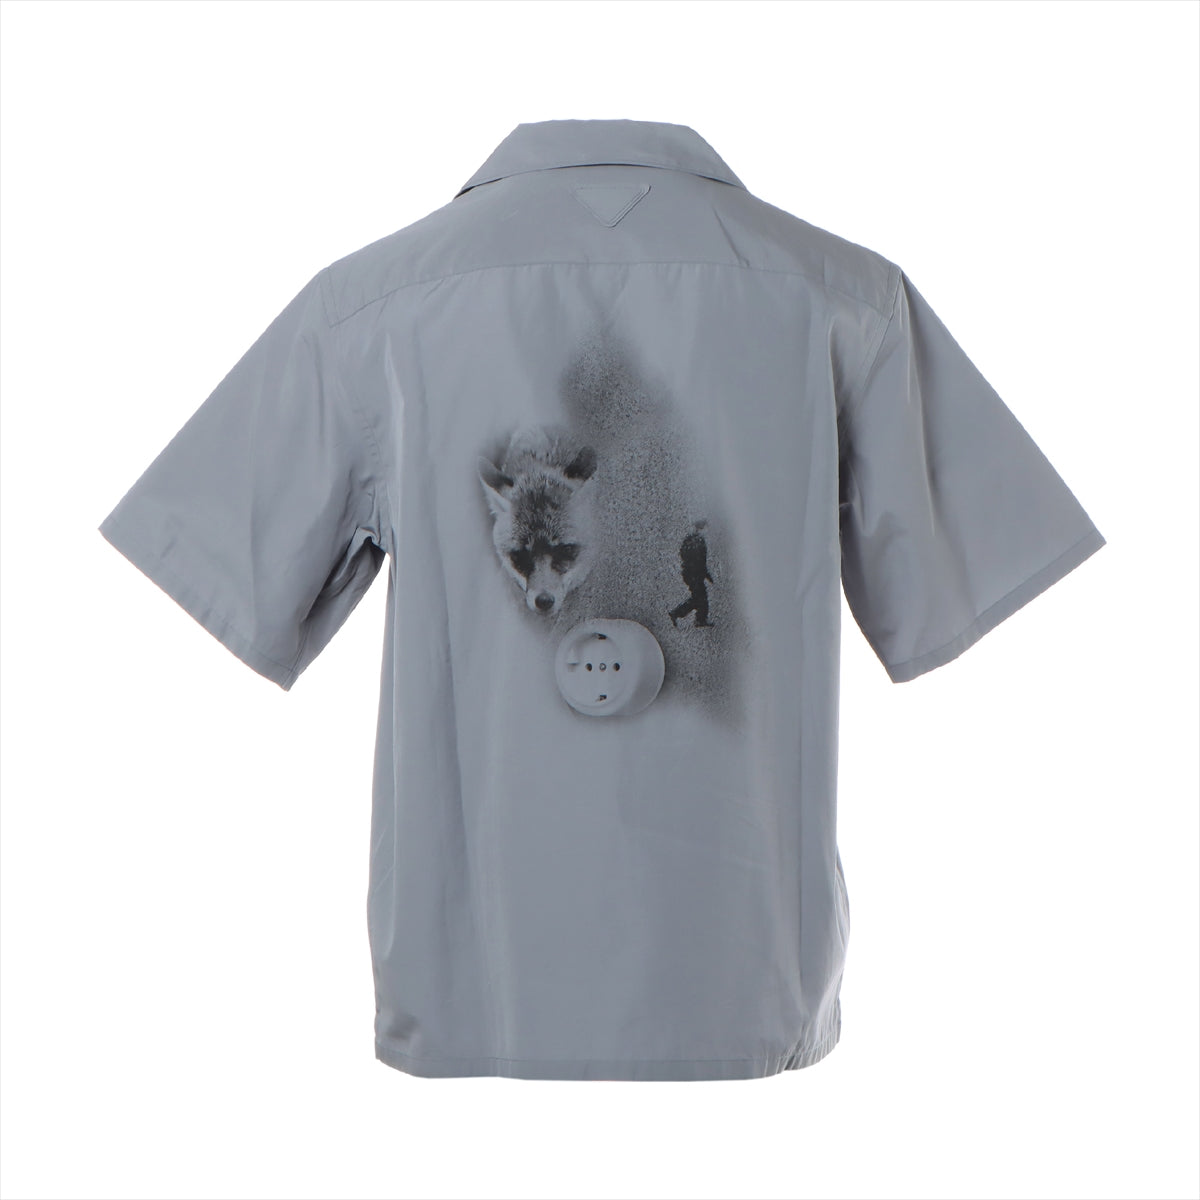 Prada 22SS Cotton Shirt M Men's Grey  UCS414